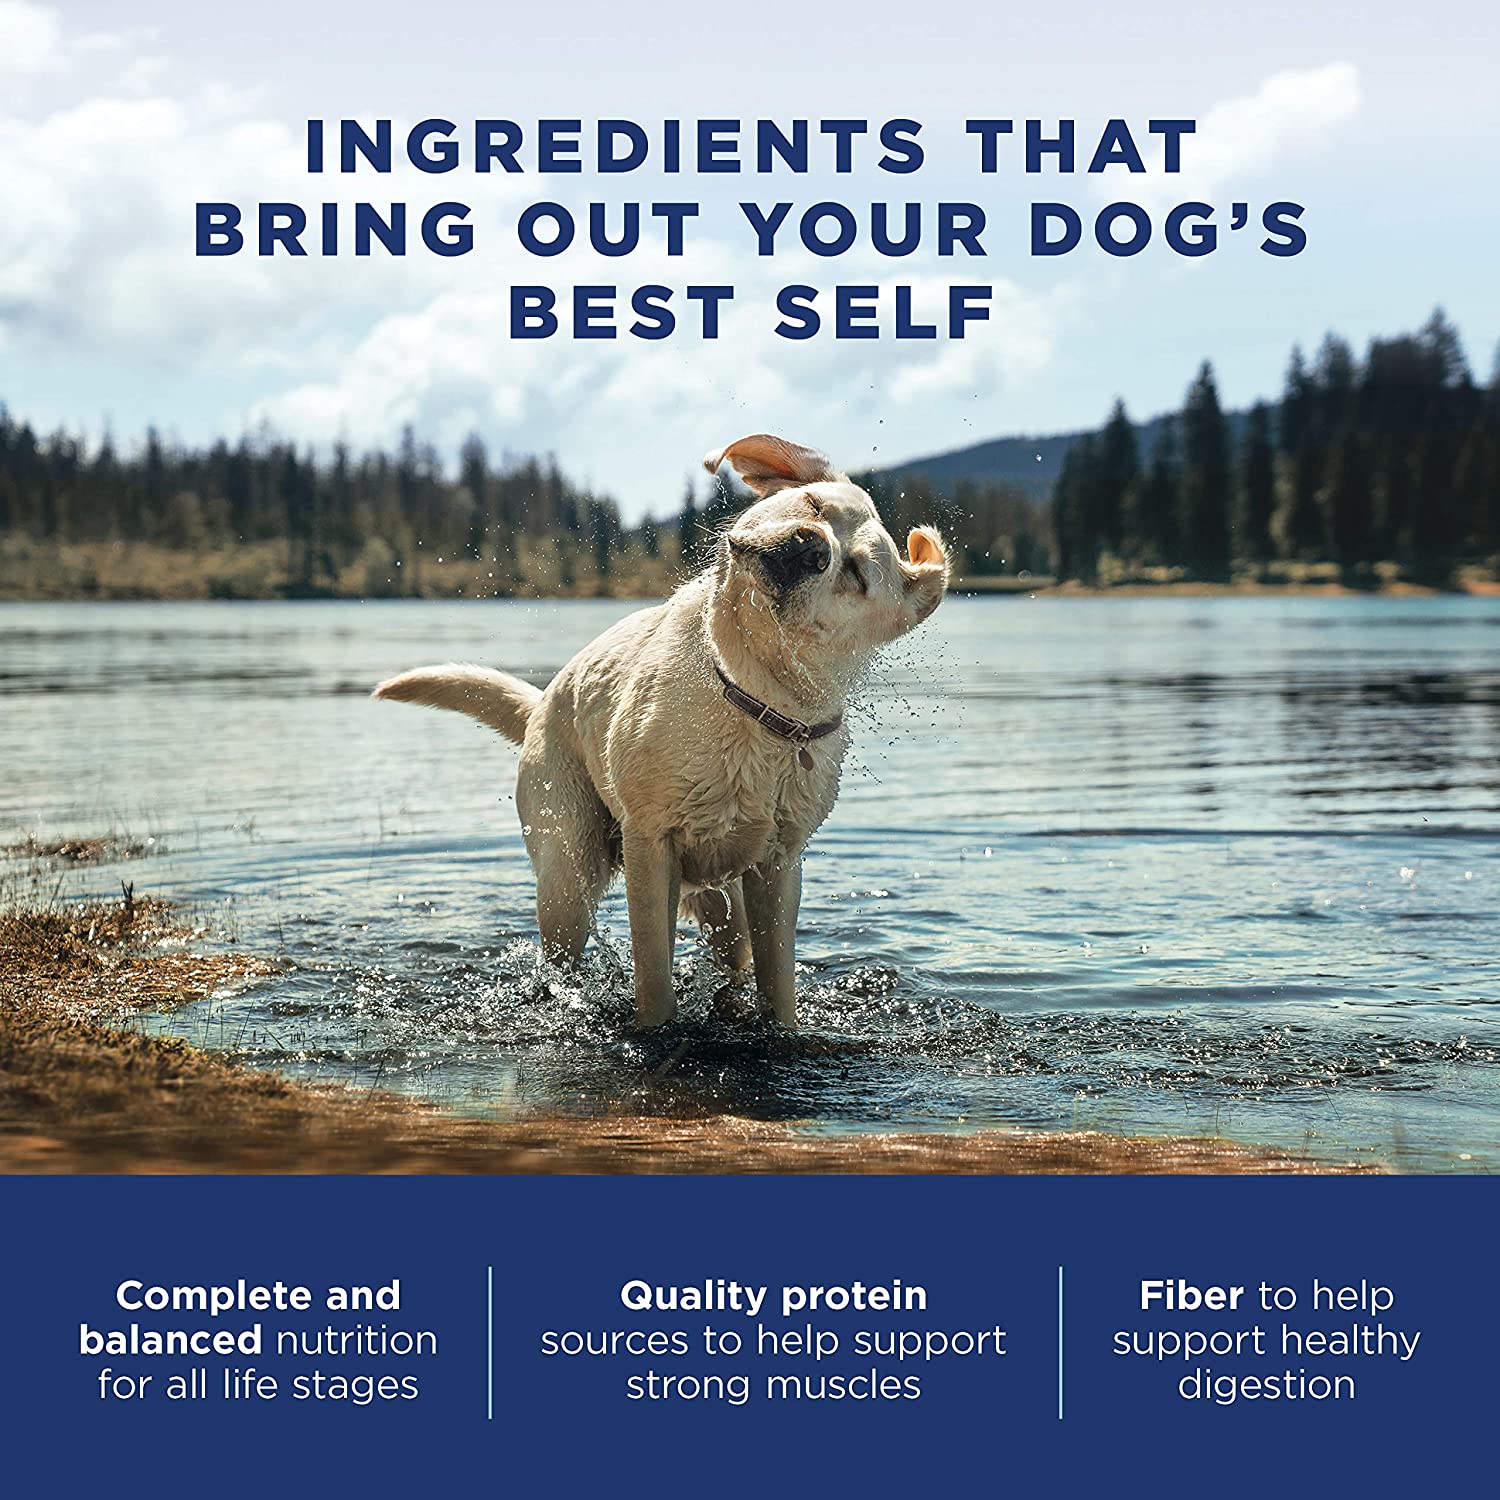 Natural Balance Canned Dog Food Lamb  Canned Dog Food  | PetMax Canada